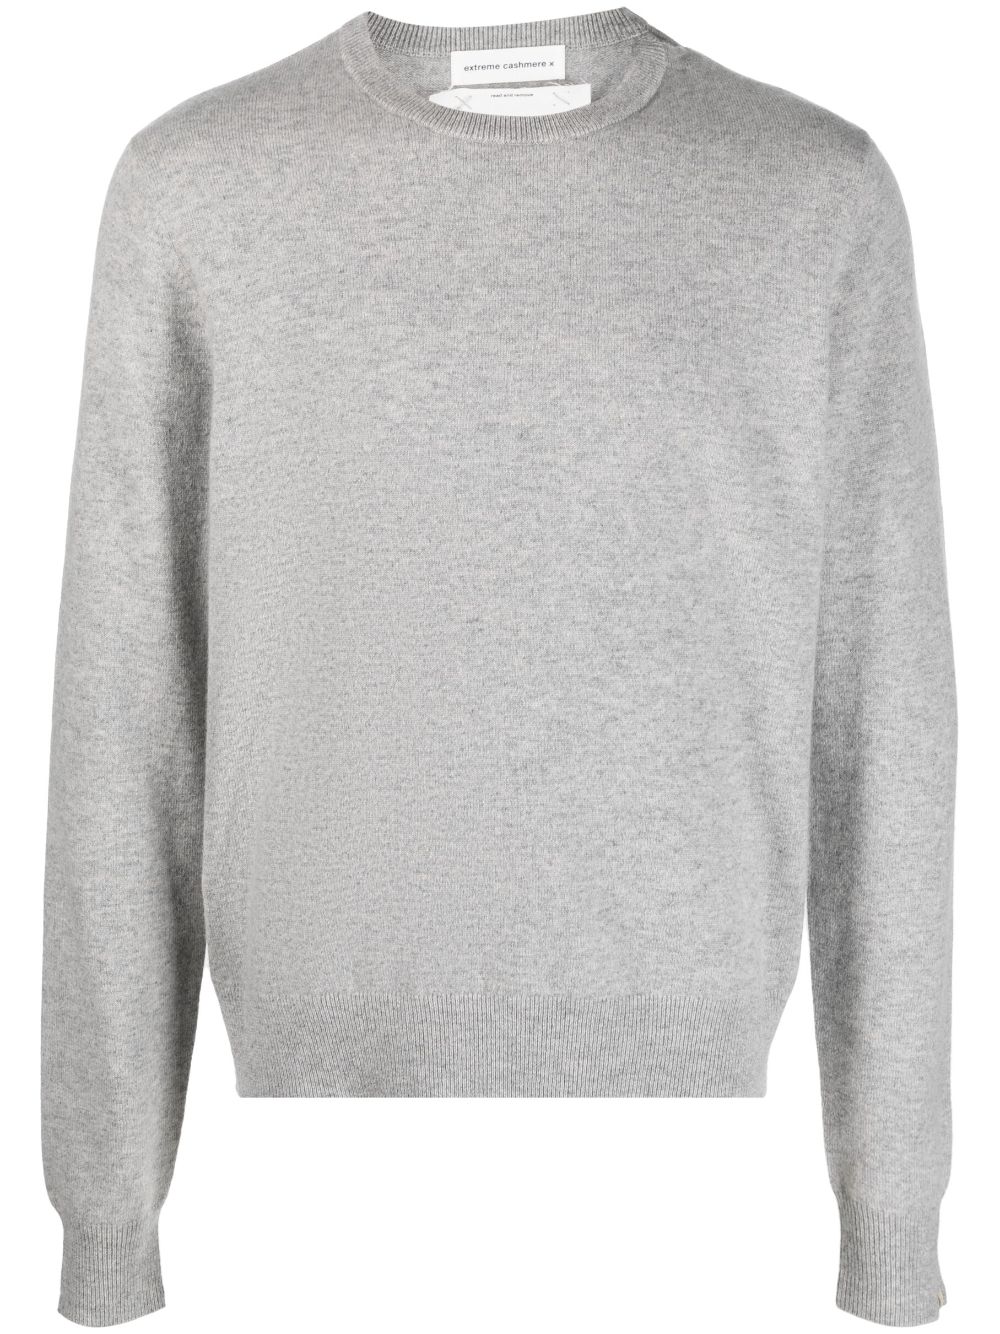 Extreme Cashmere N36 长袖针织毛衣 In Grey